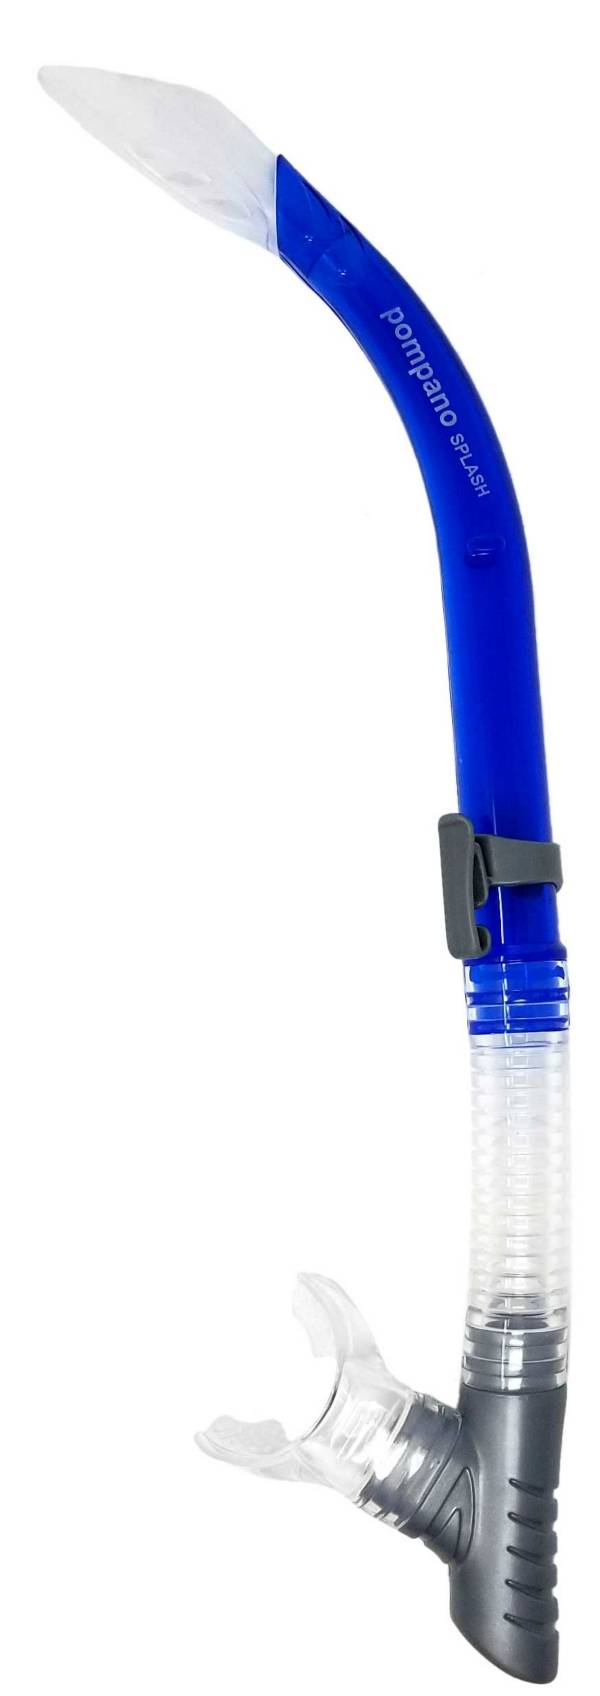 Guardian Pompano Semi-Dry Top Snorkel product image